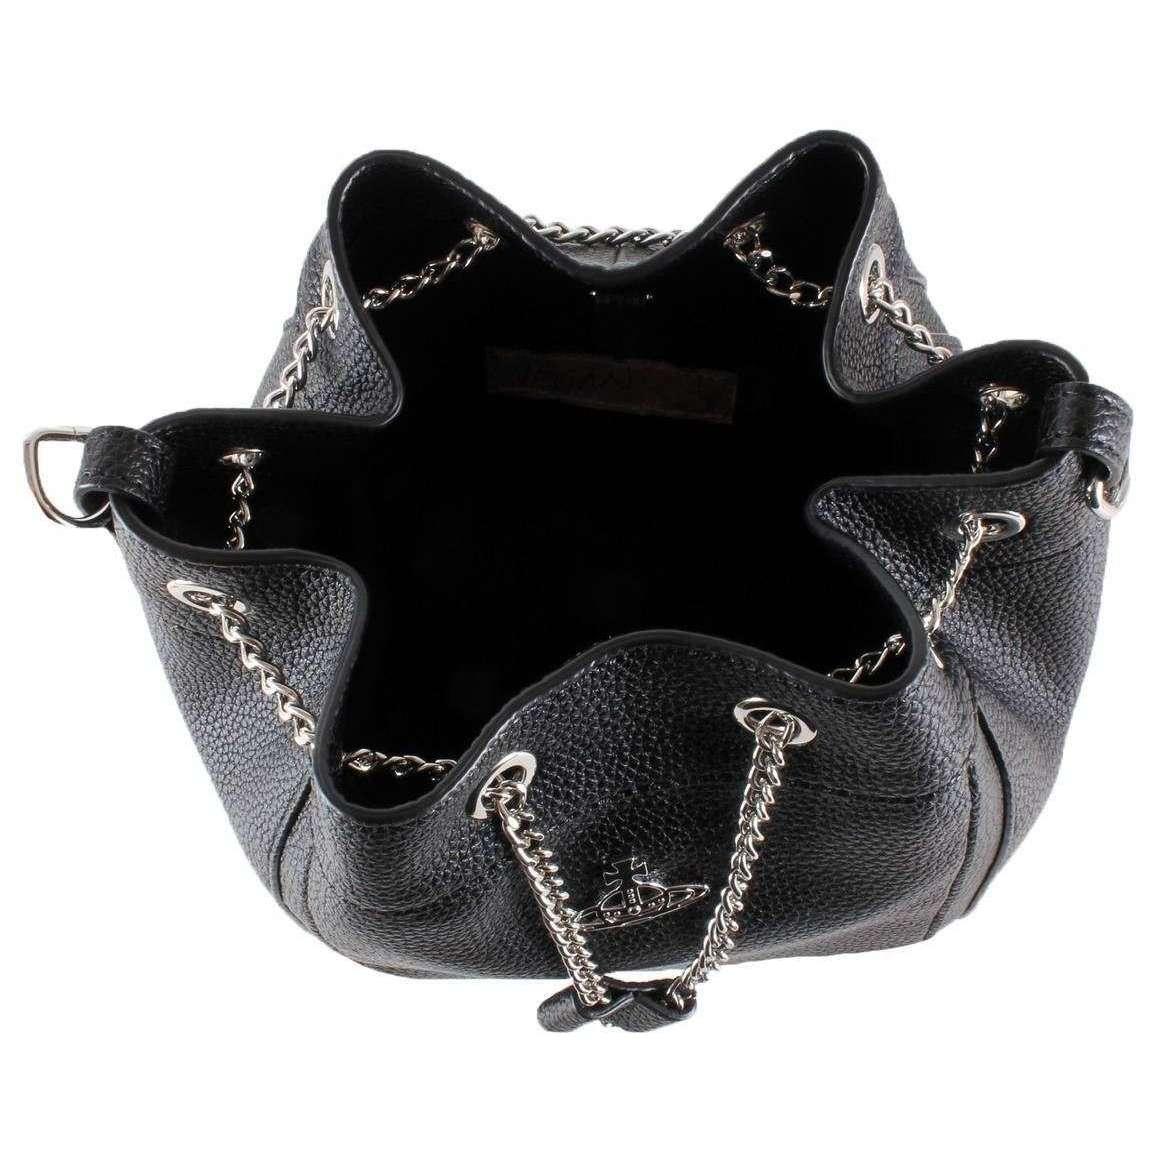 Vivienne Westwood Johanna Bucket Bag in Black - Lyst